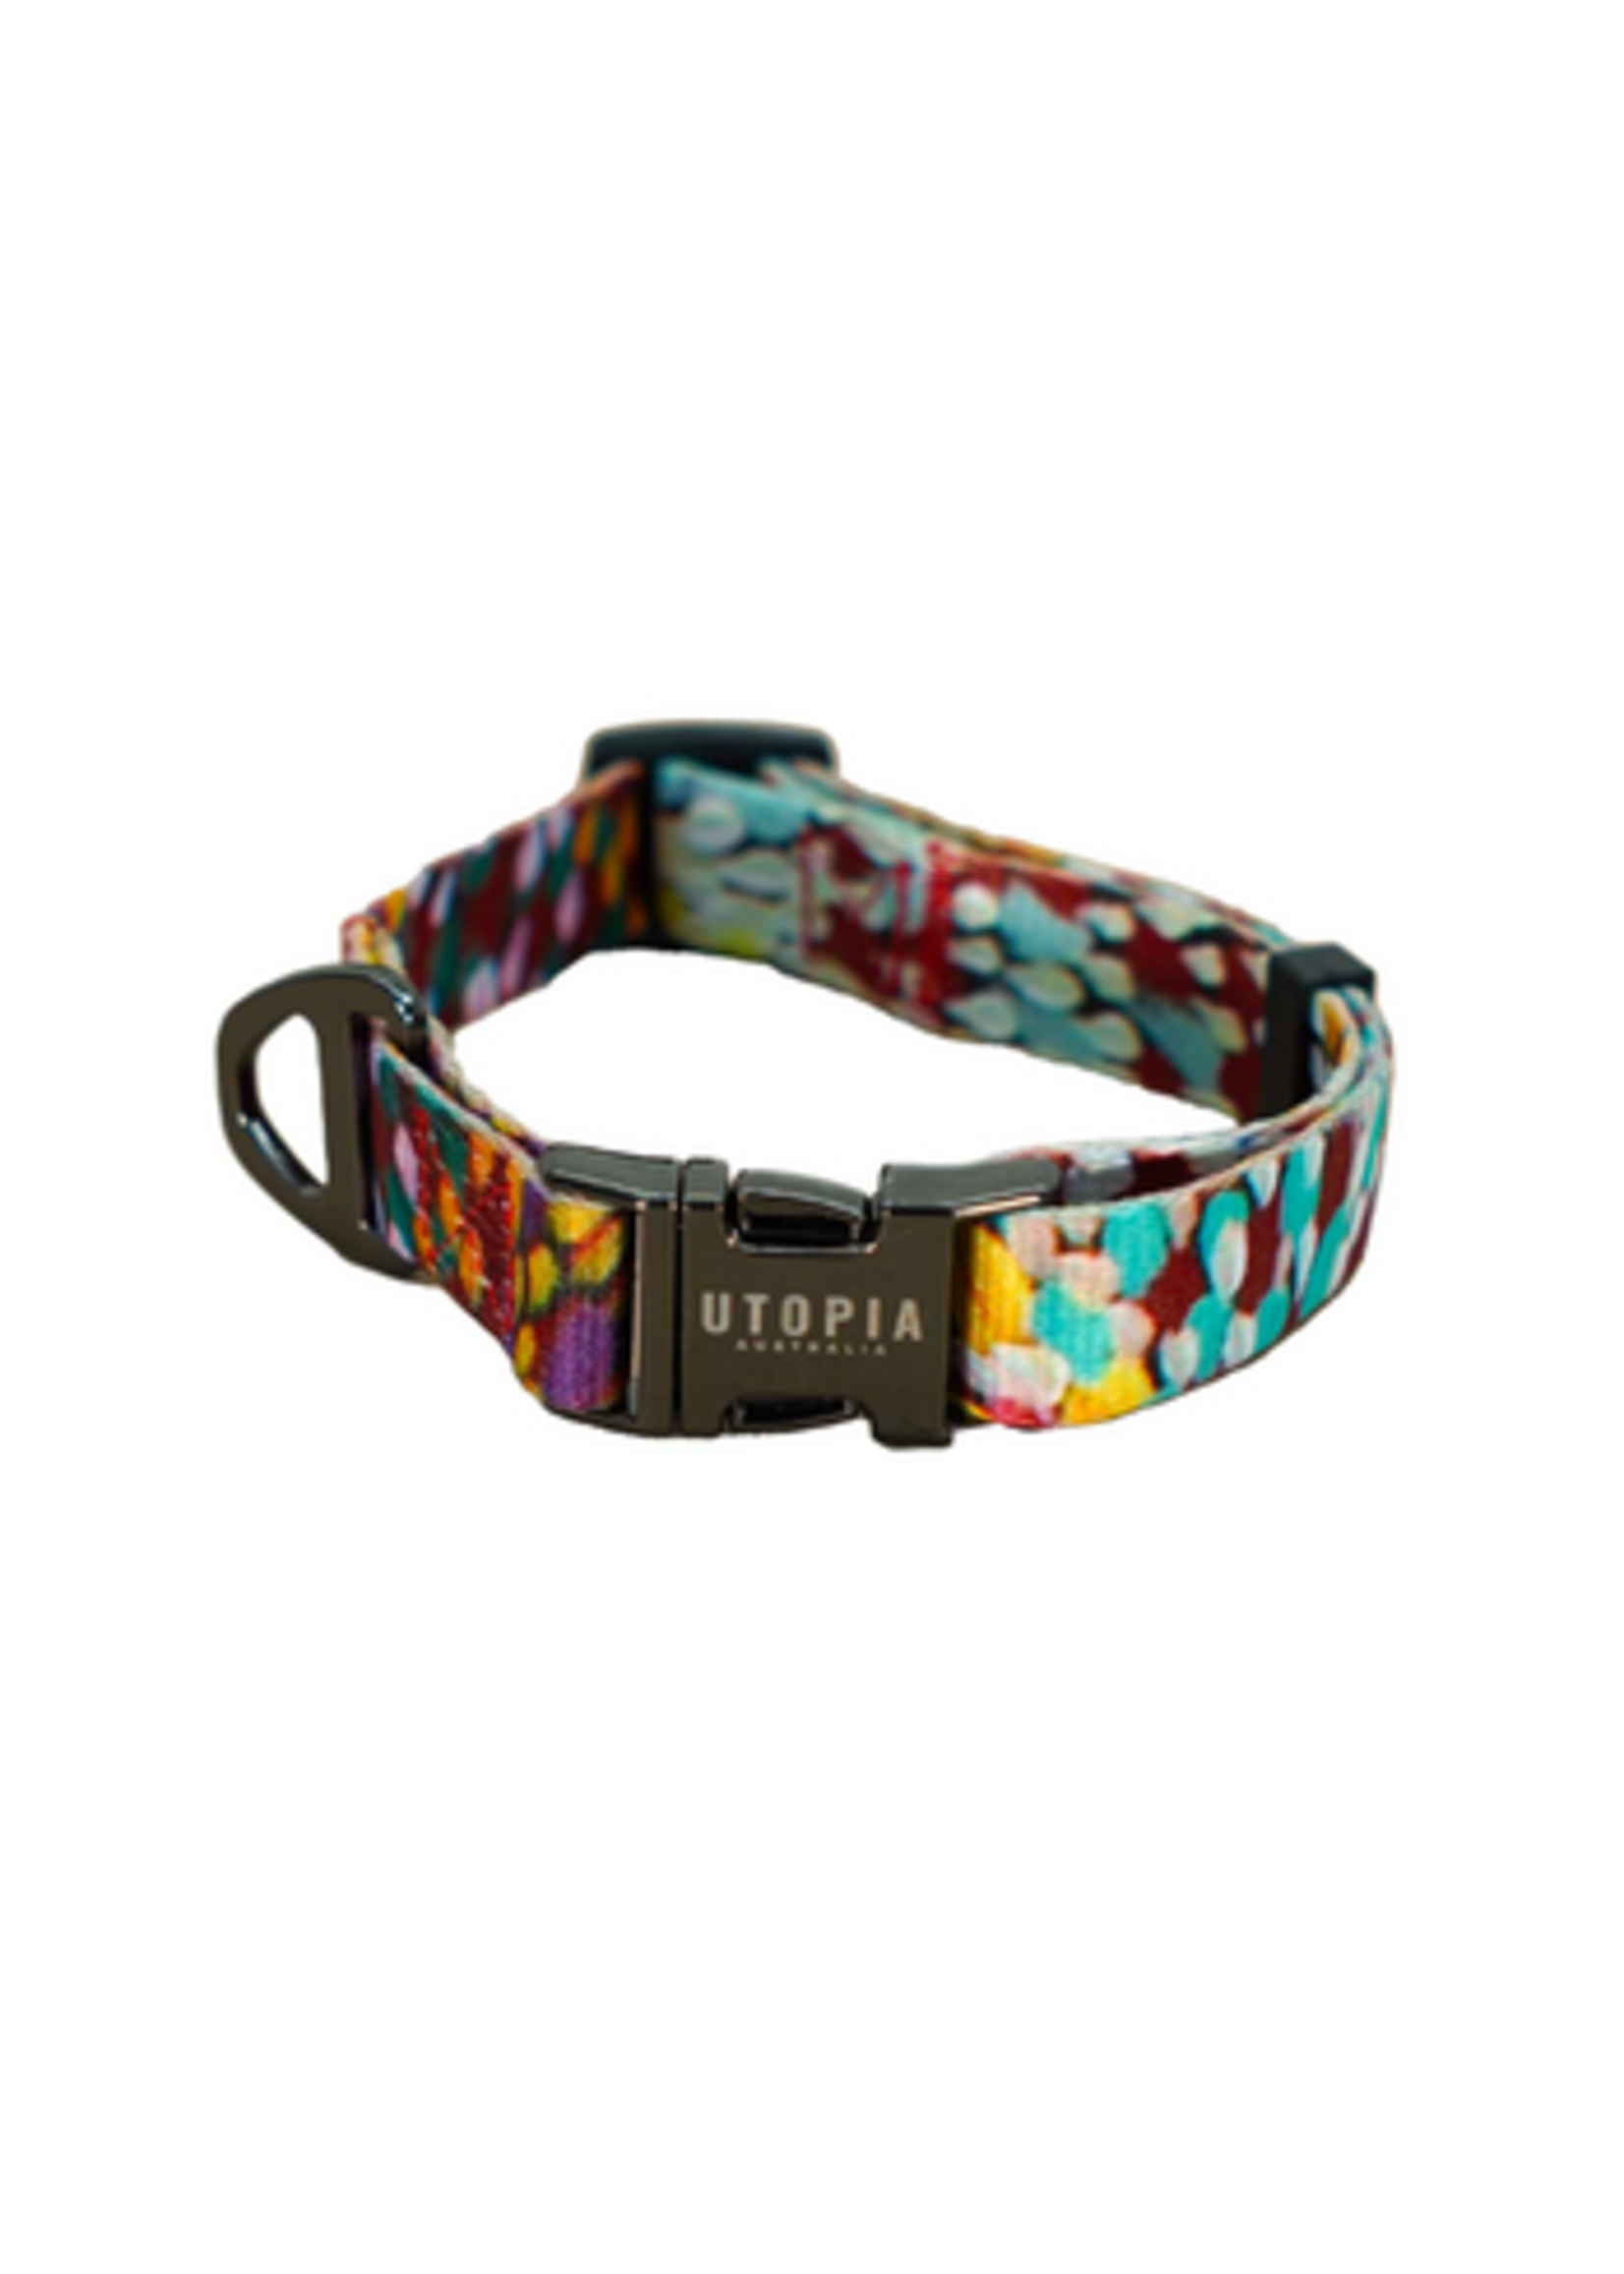 Utopia Utopia Dog Collar - Medium - Janelle Stockman - Fire Sparks (SDCM129)